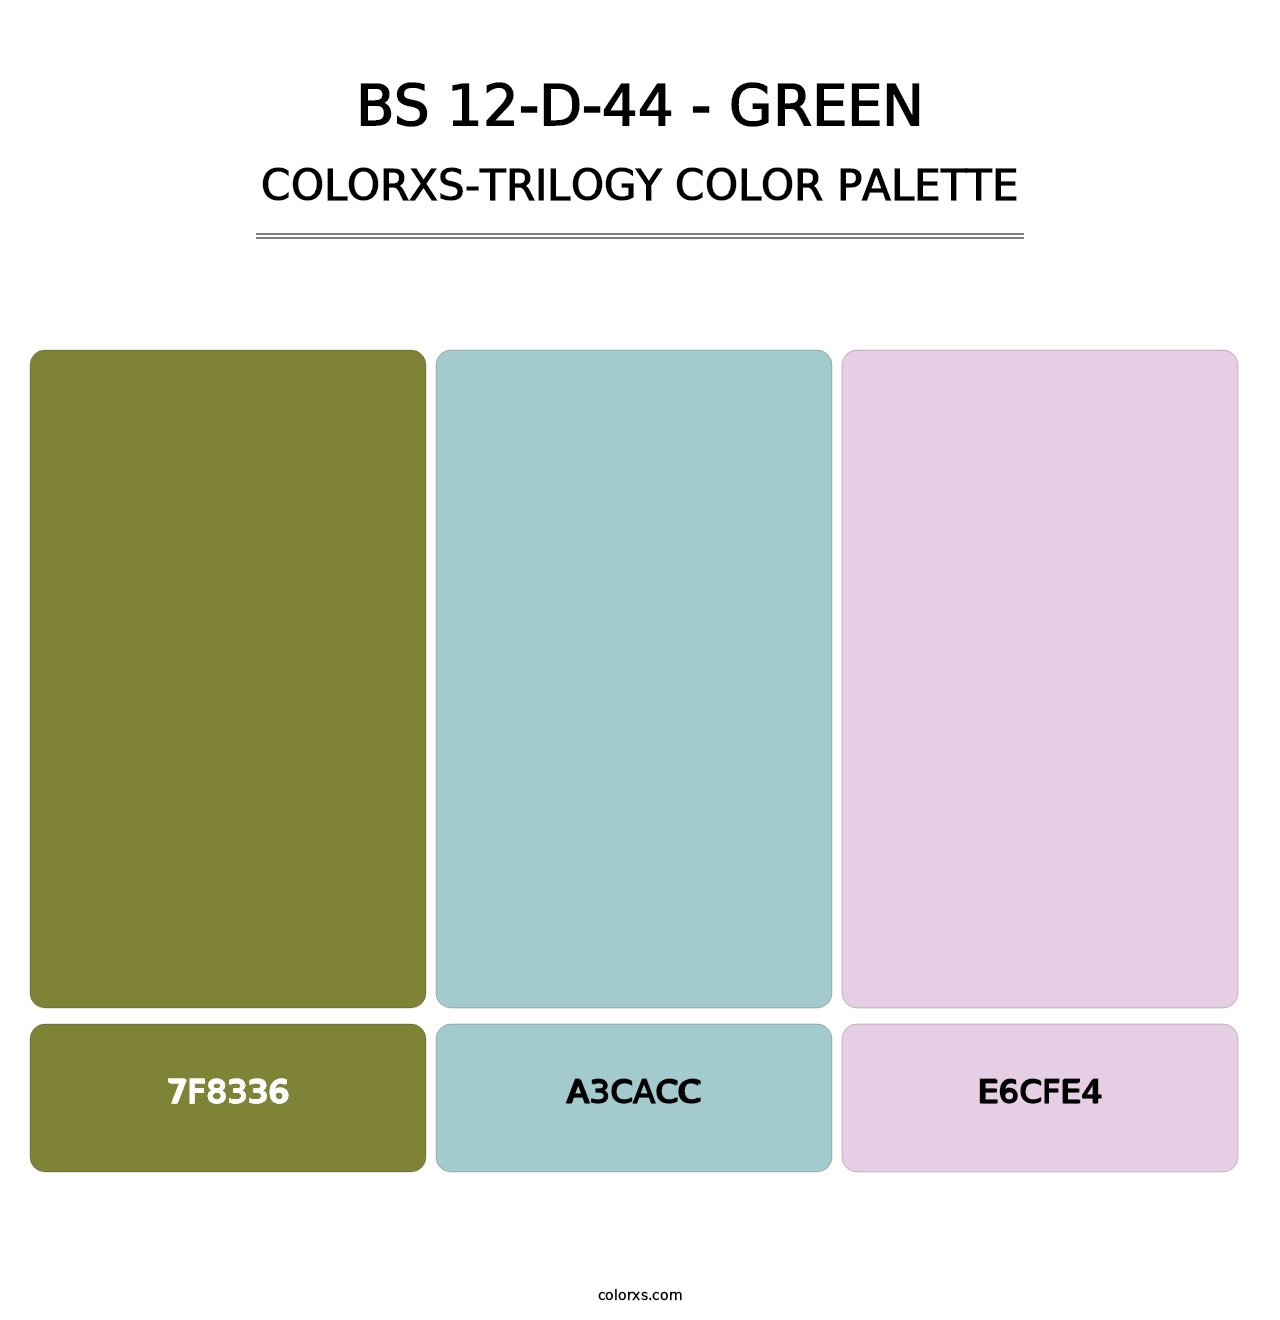 BS 12-D-44 - Green - Colorxs Trilogy Palette